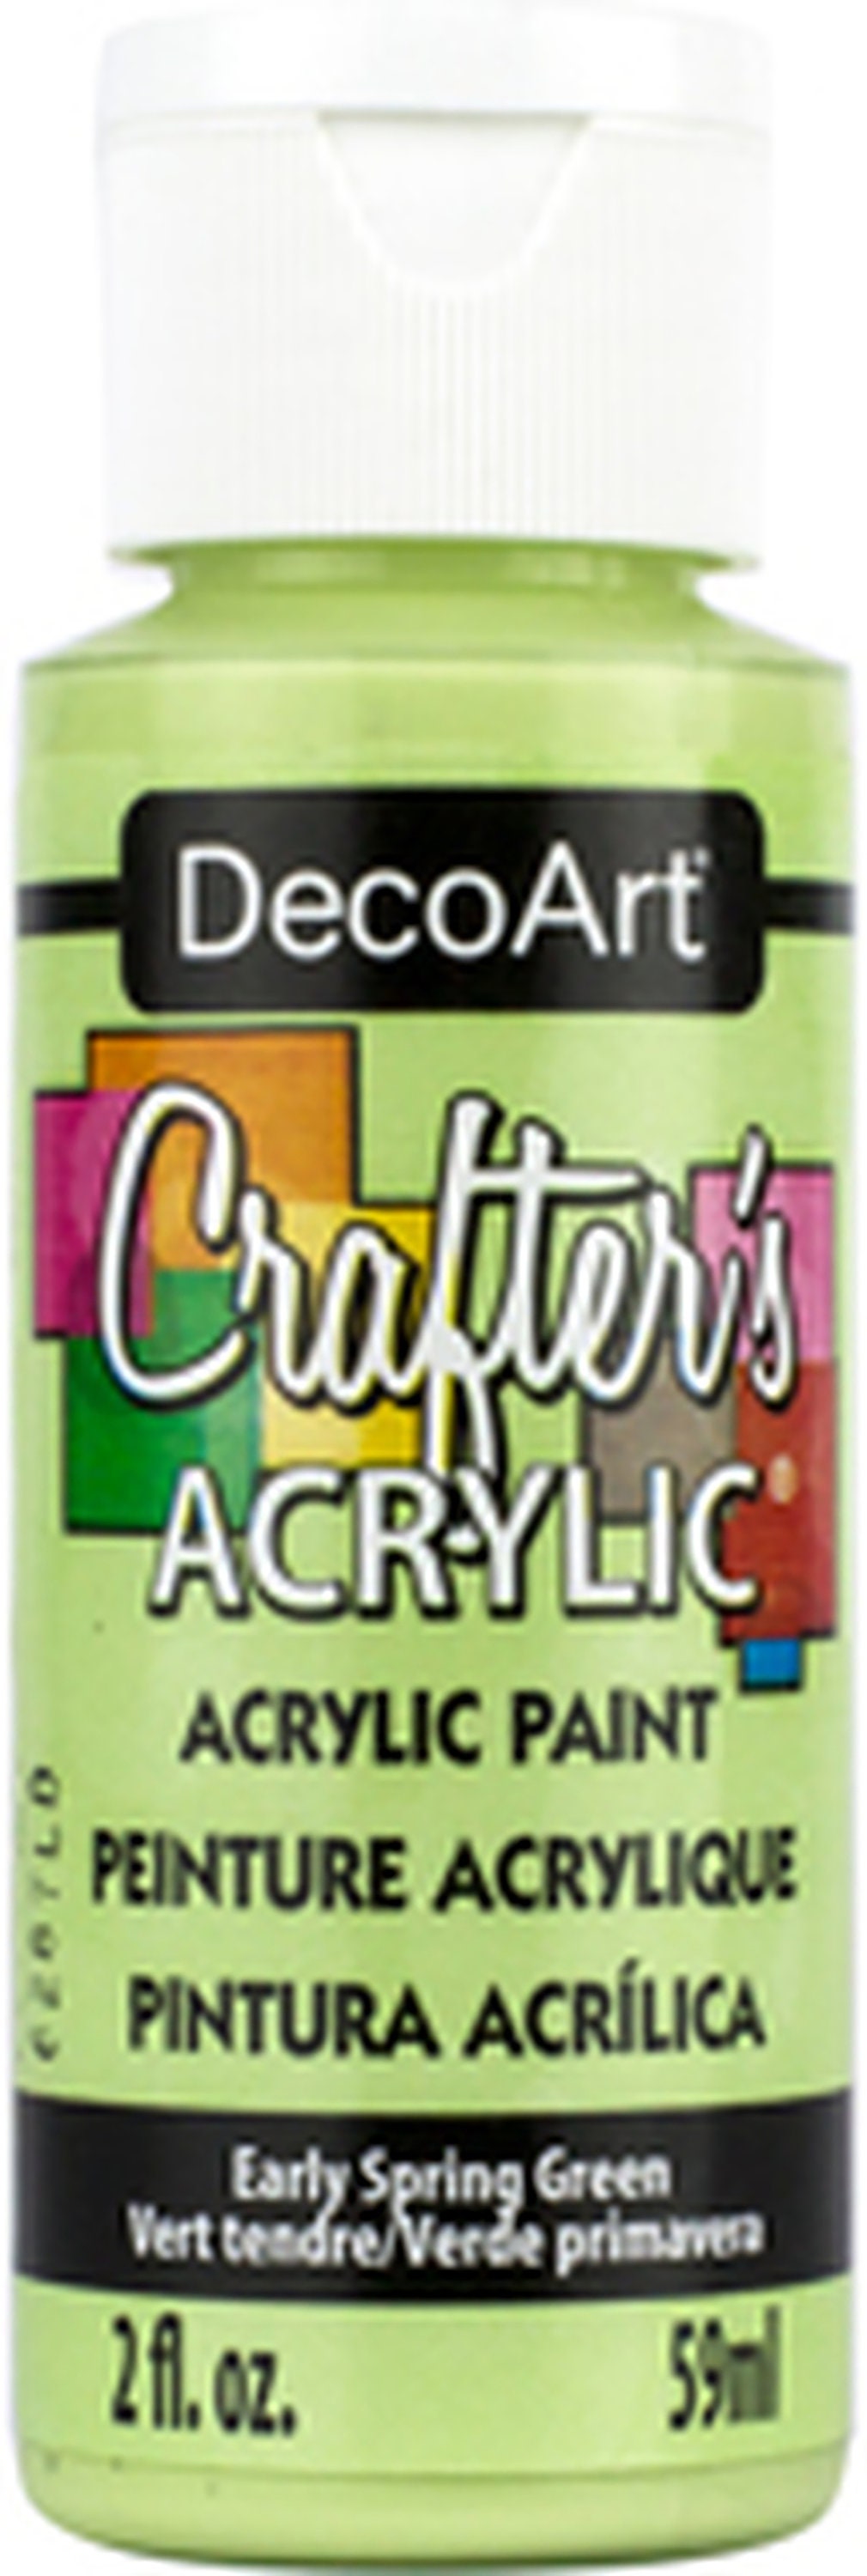 Decoart Crafters Acrylic Paint Pink Tones 59ml 2oz Bottles Craft Paints 